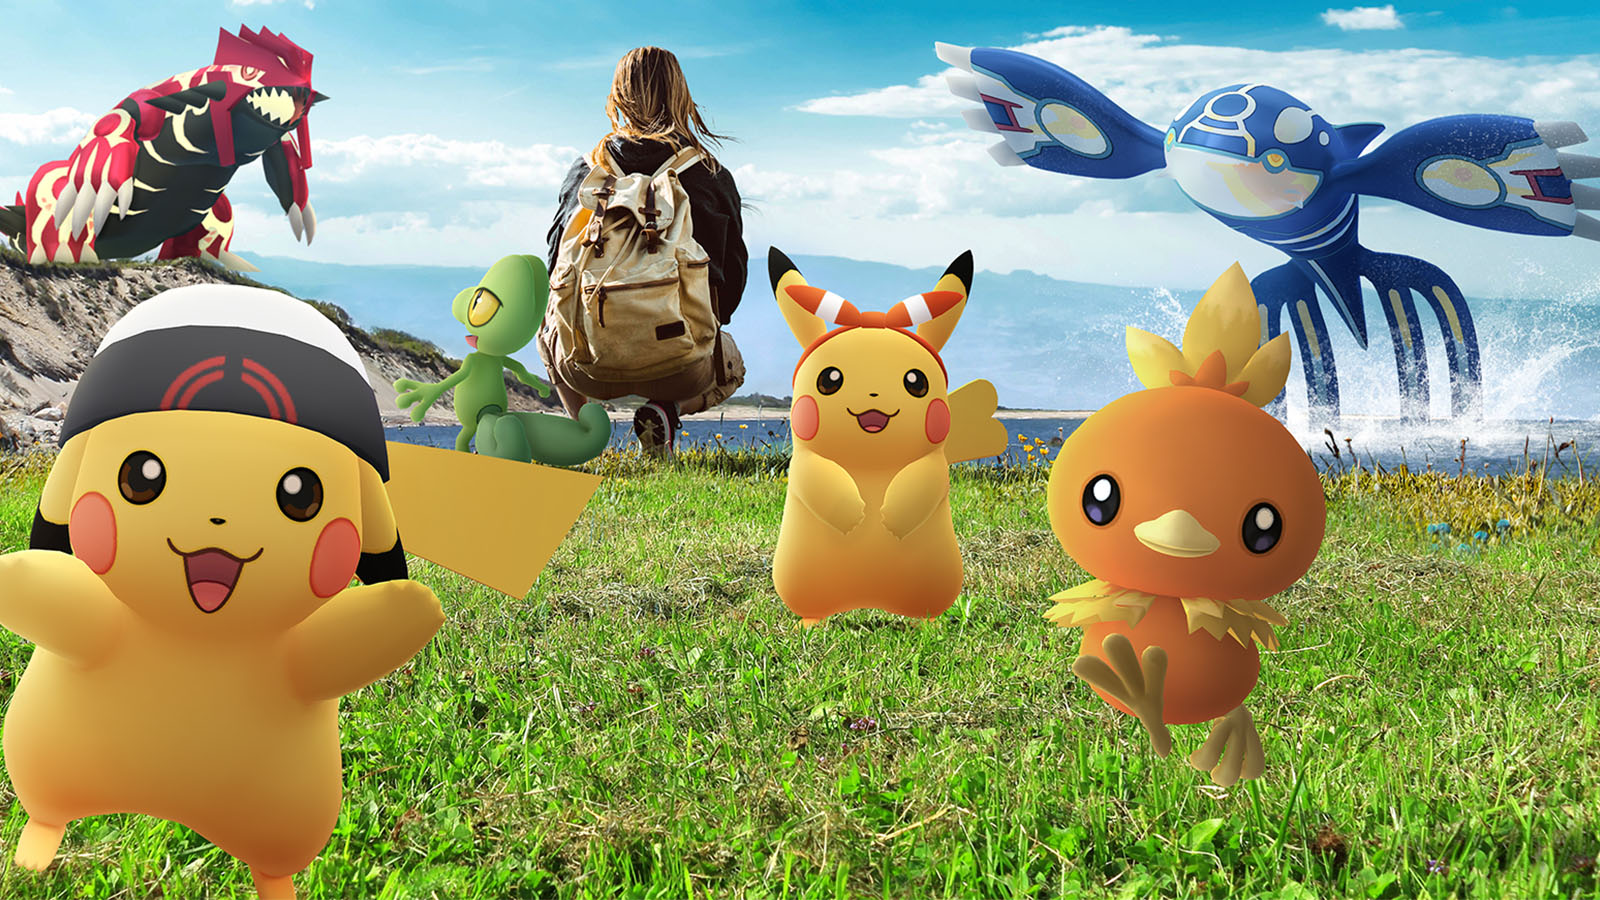 Tuesday: Pokémon GO - Ultra Beasts + Pokémon Masters EX - Egg Event -   News